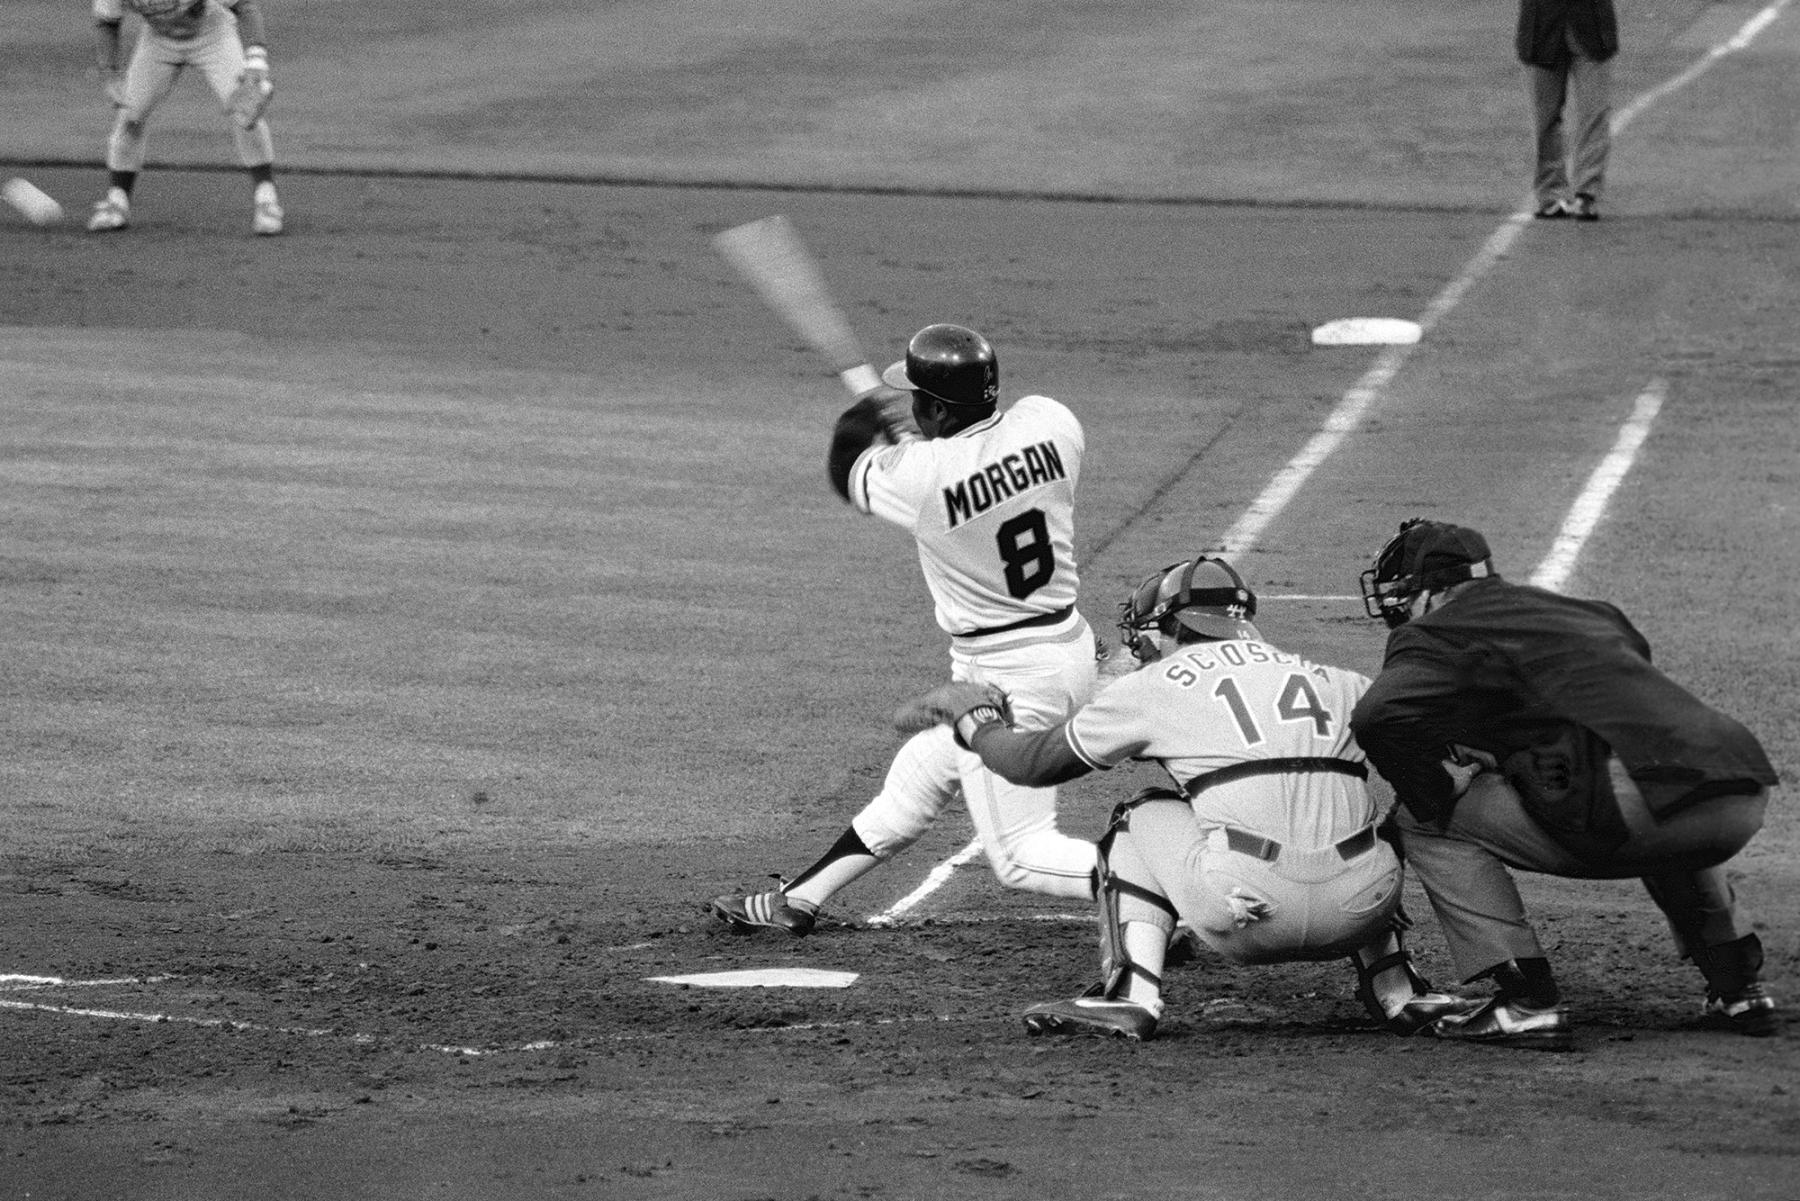 1980 Joe Morgan Game Worn Houston Astros Jersey